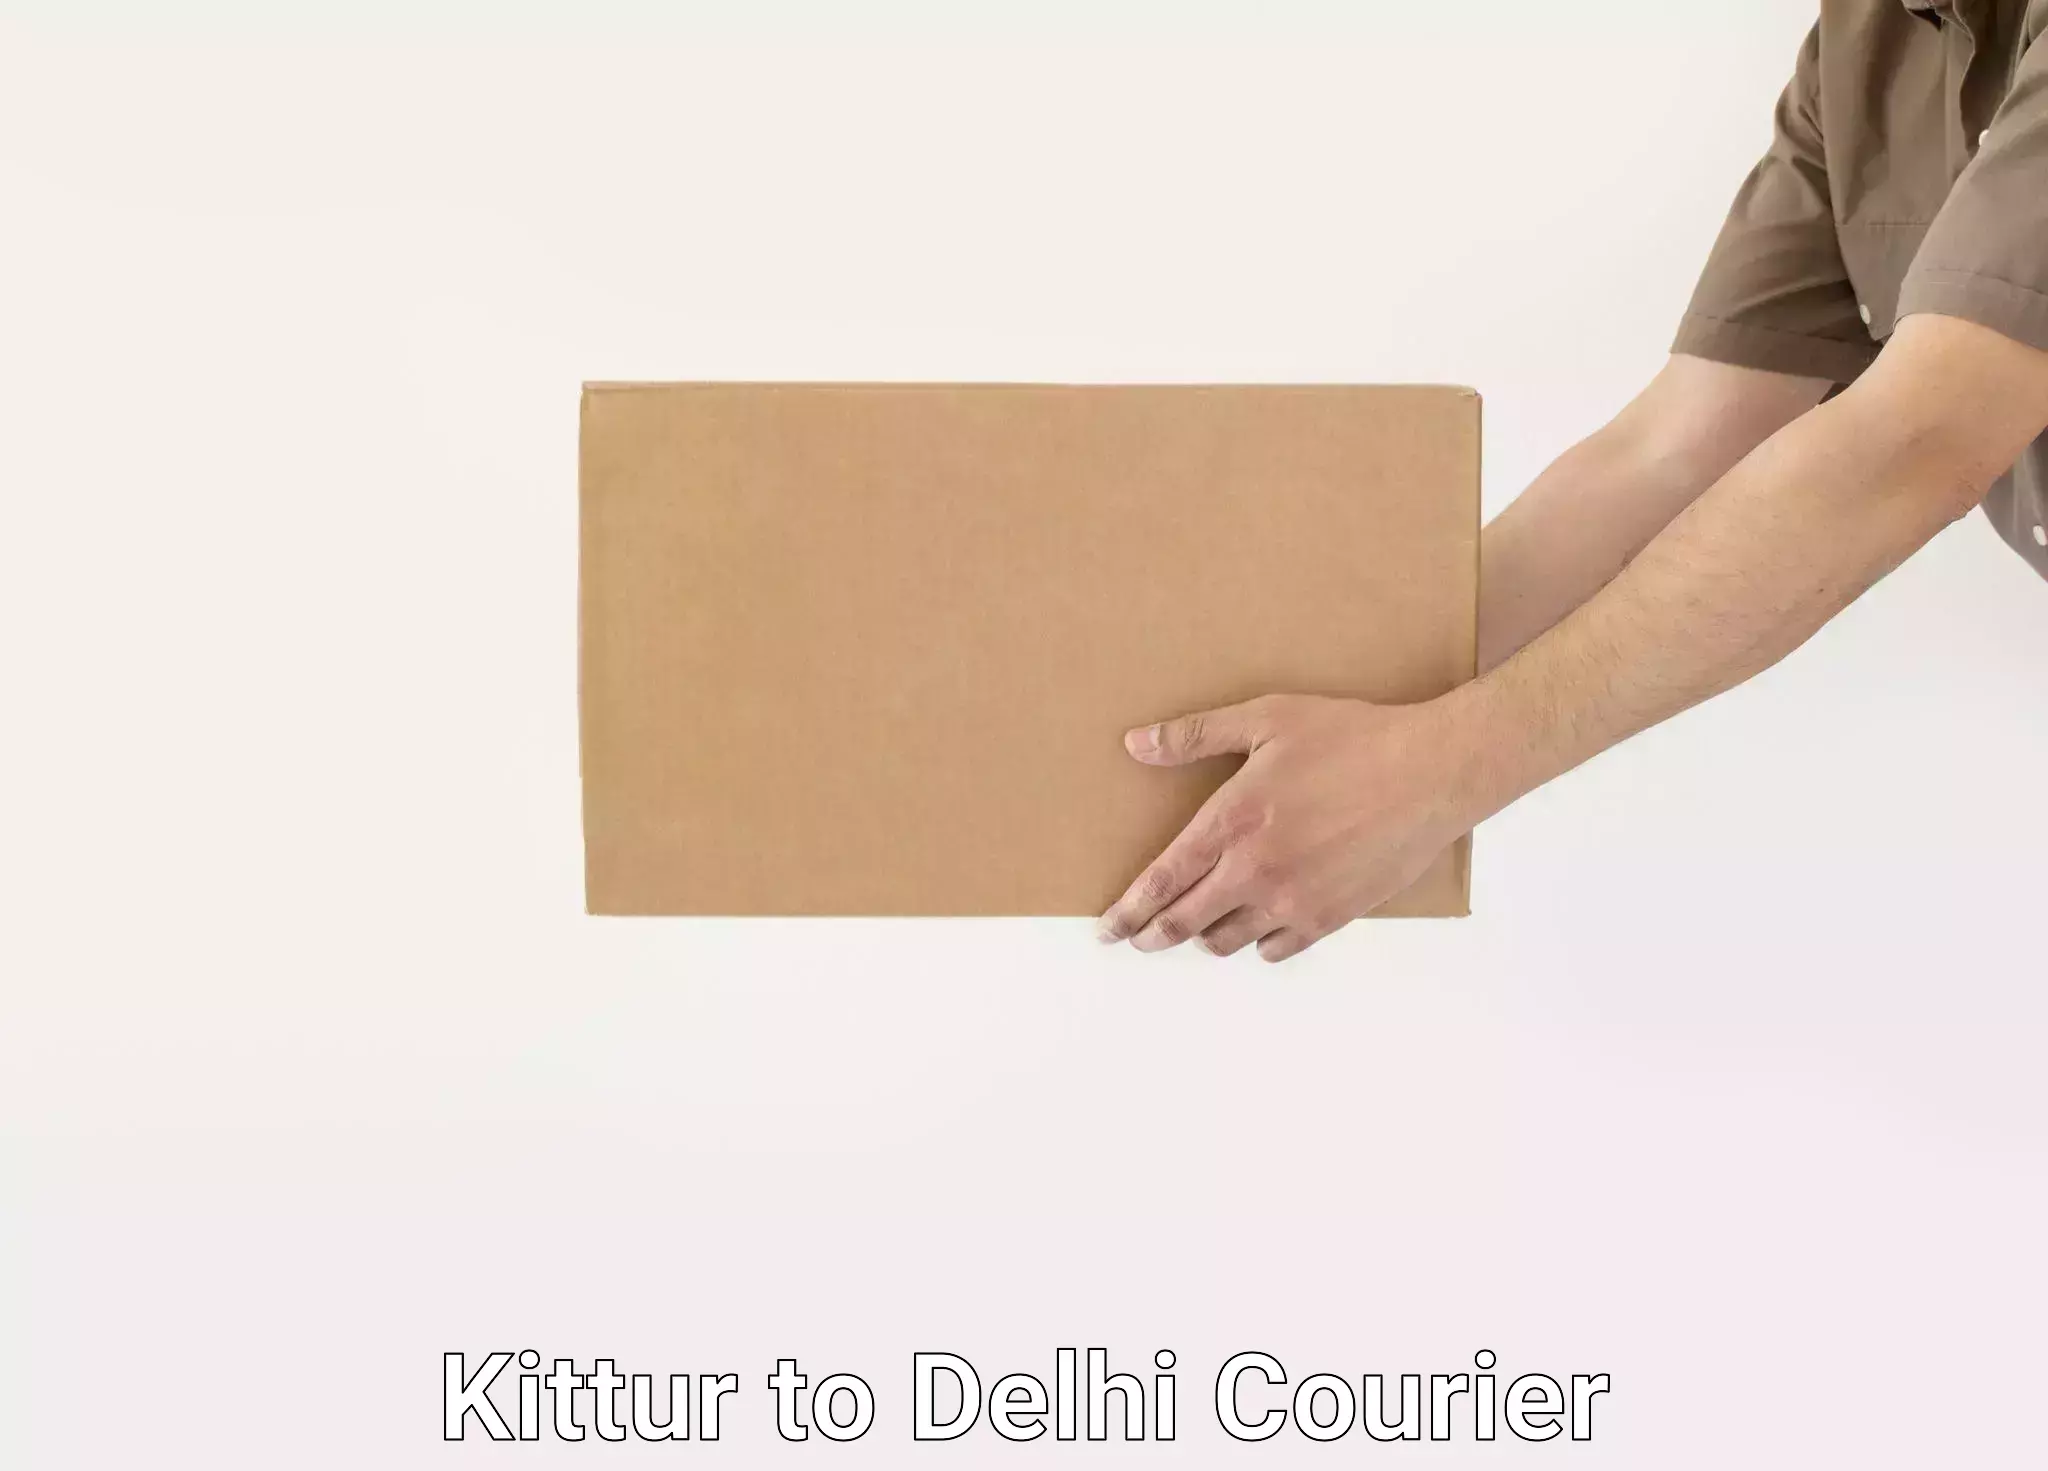 Efficient moving company Kittur to Delhi